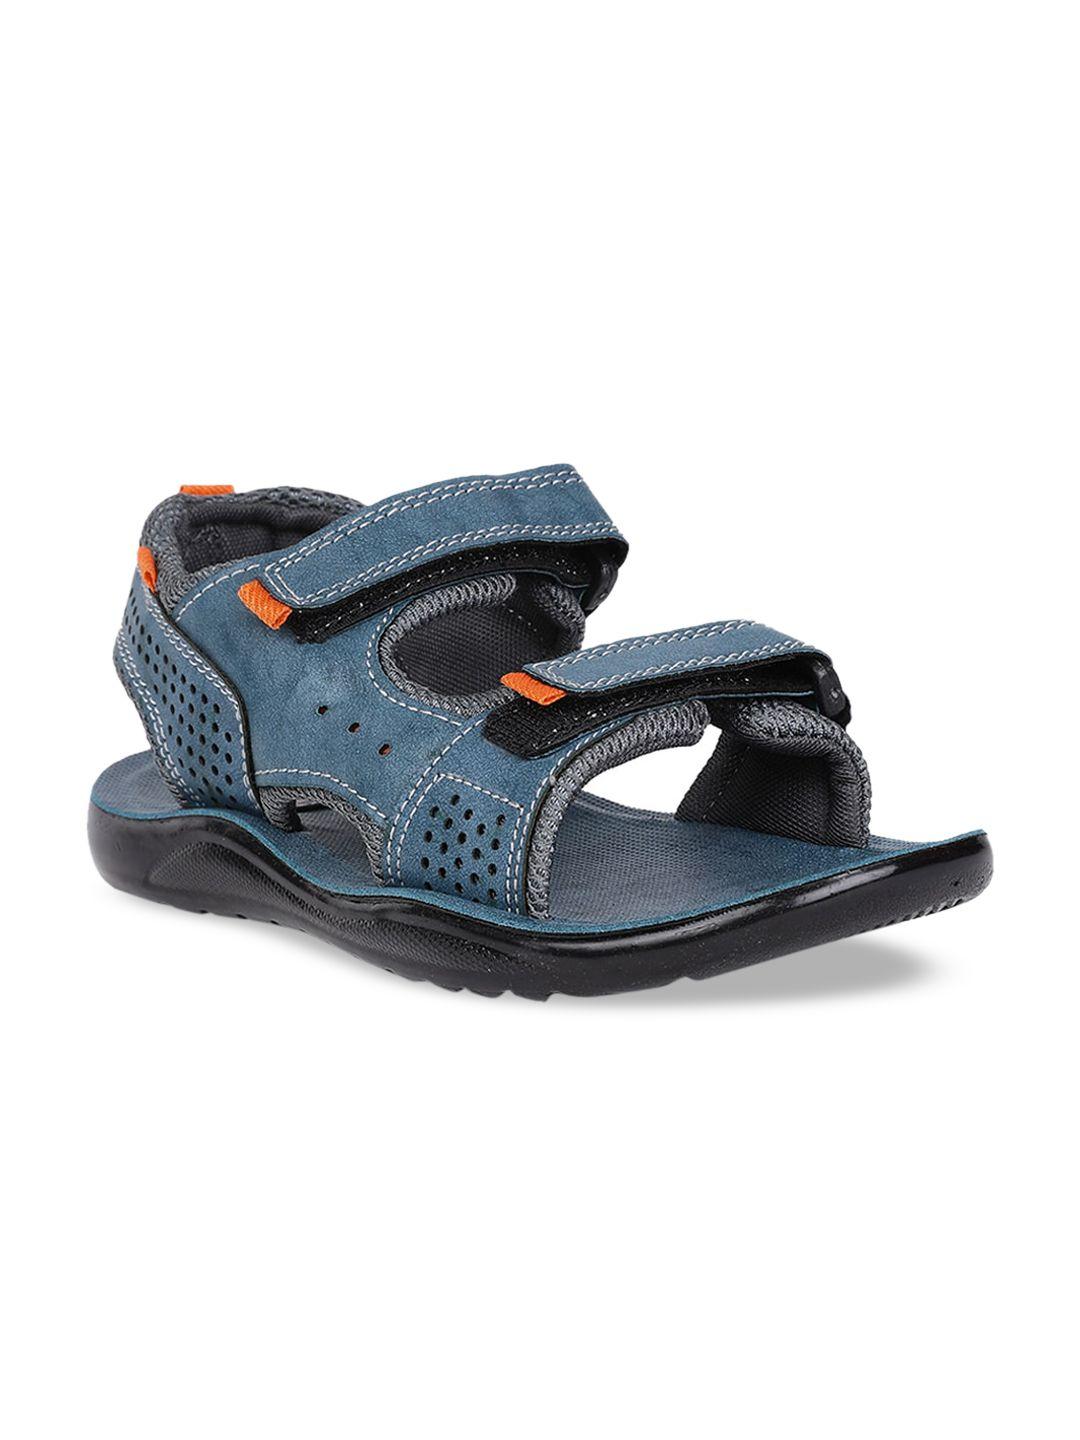 bata boys blue & orange sports sandals